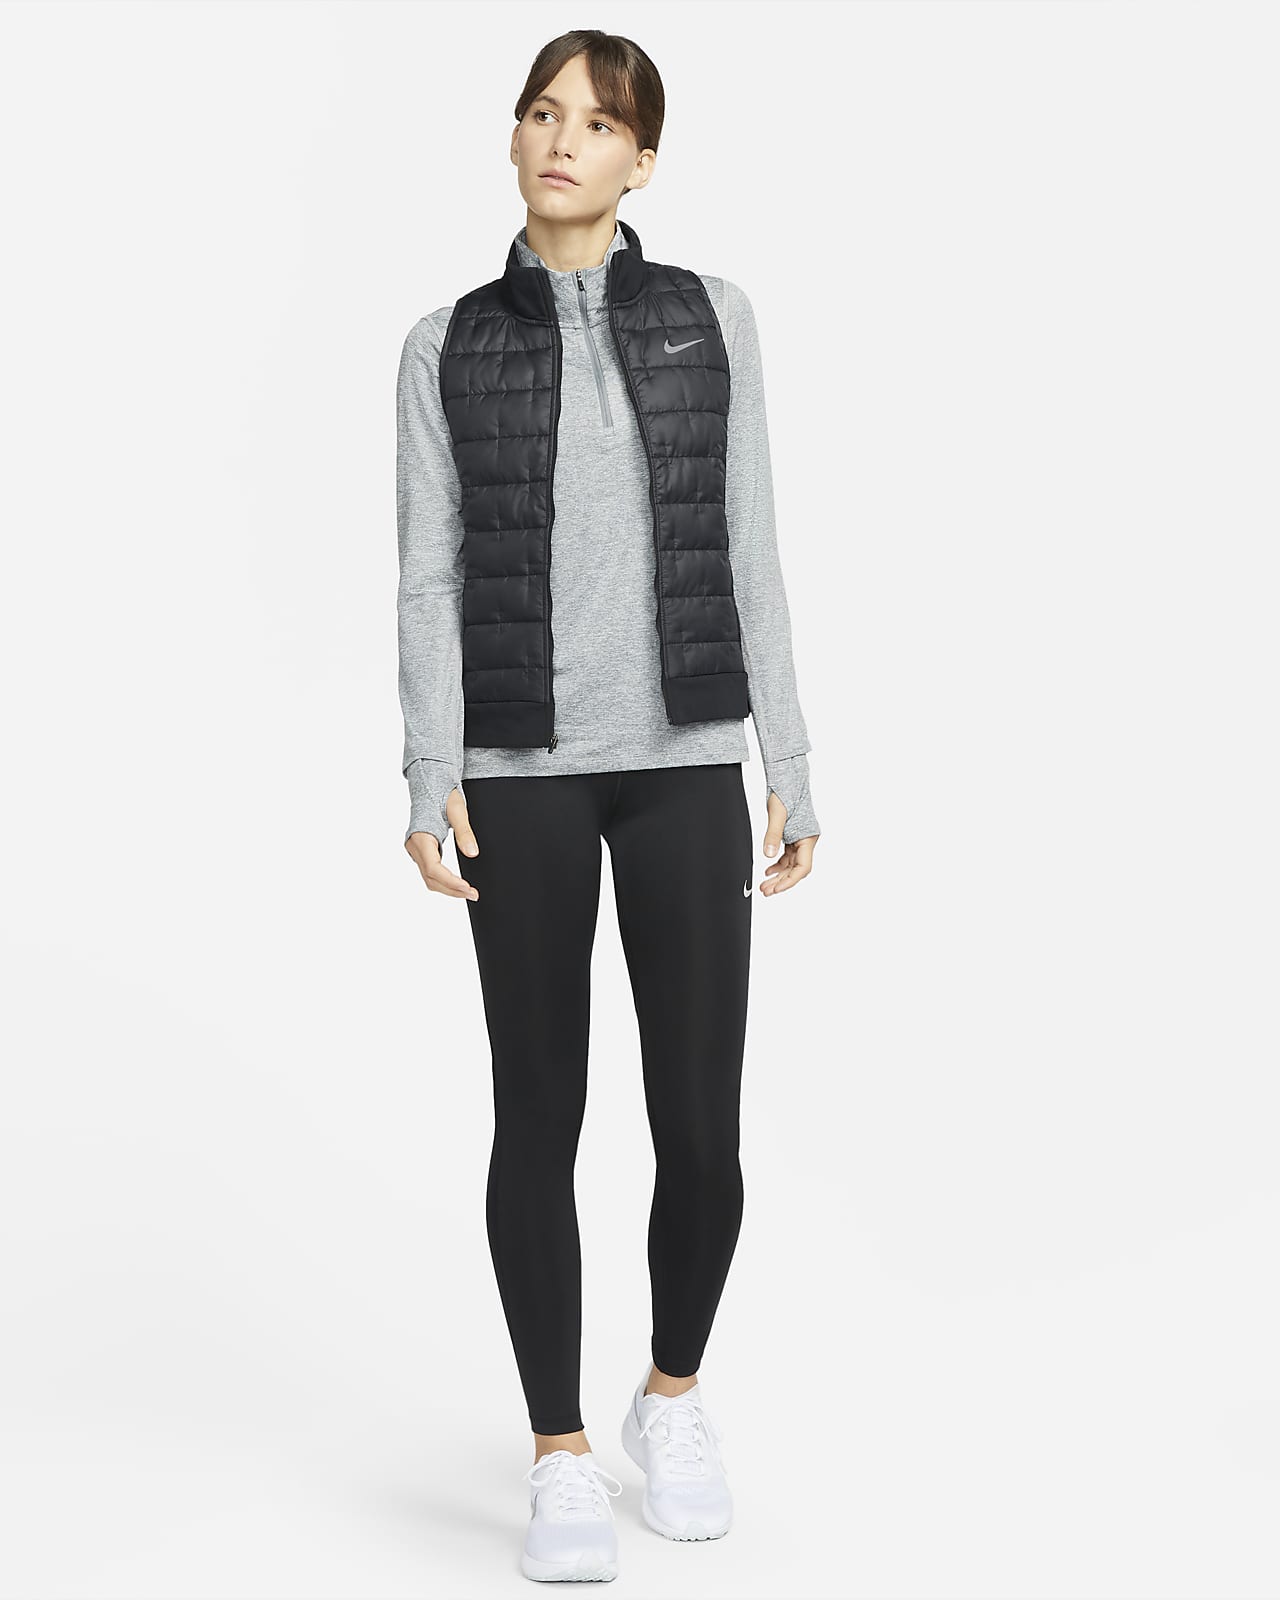 [Nike] Nike Therma-FIT Essential Women's Running Pants - Medium - 2023